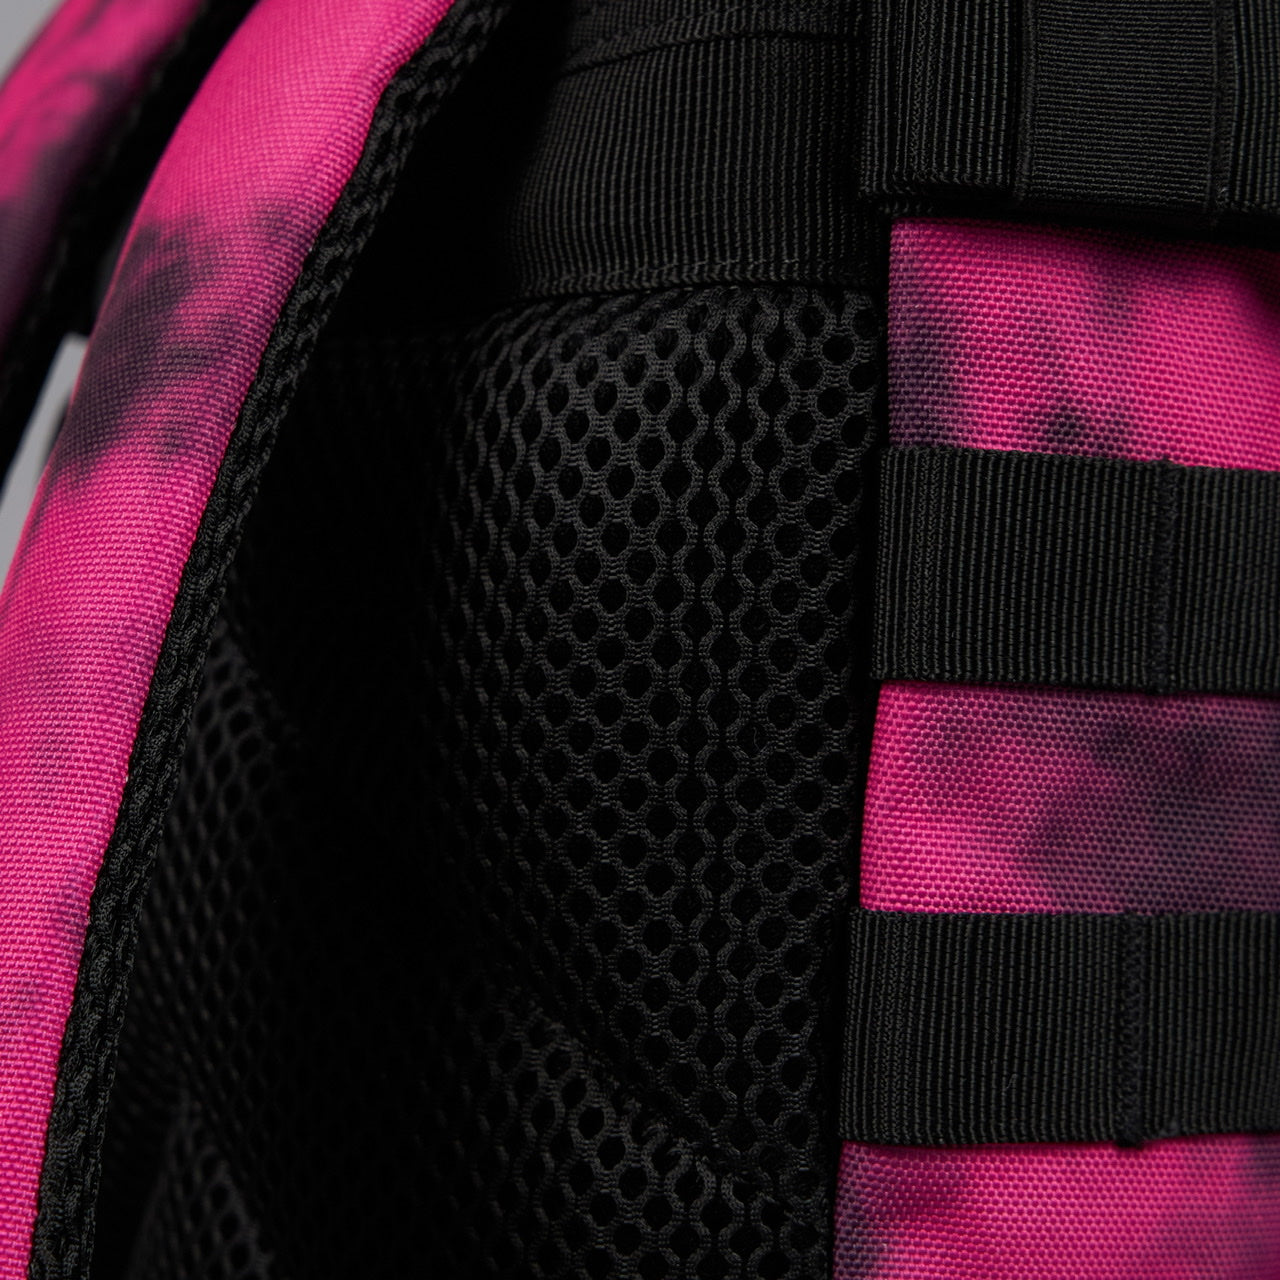 9L Backpack Mini Toxic Pink